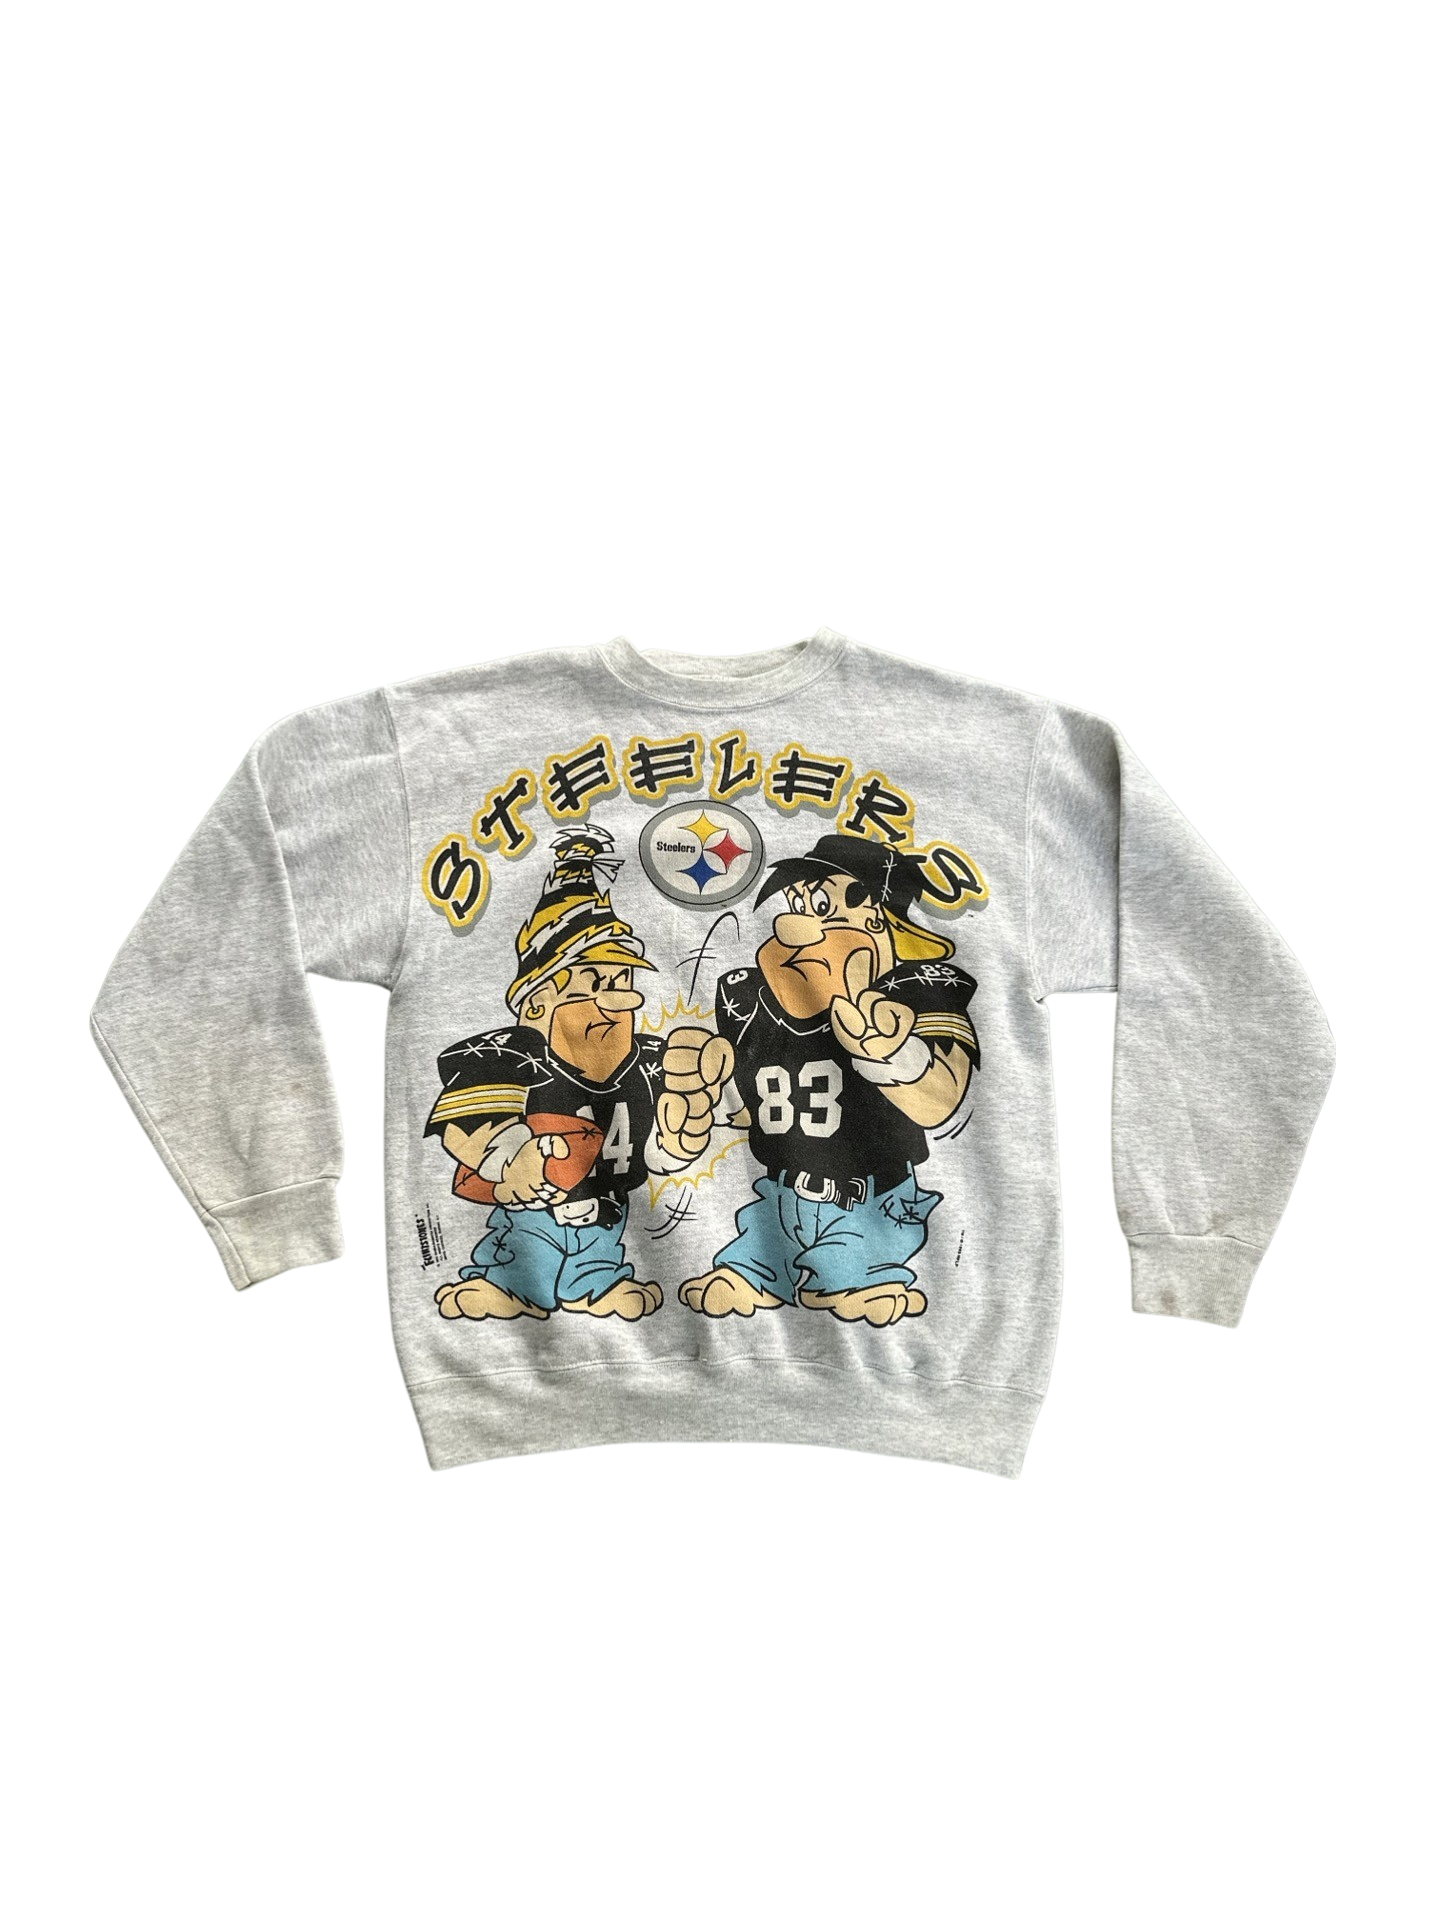 Vintage Steelers Crewneck Sweatshirt